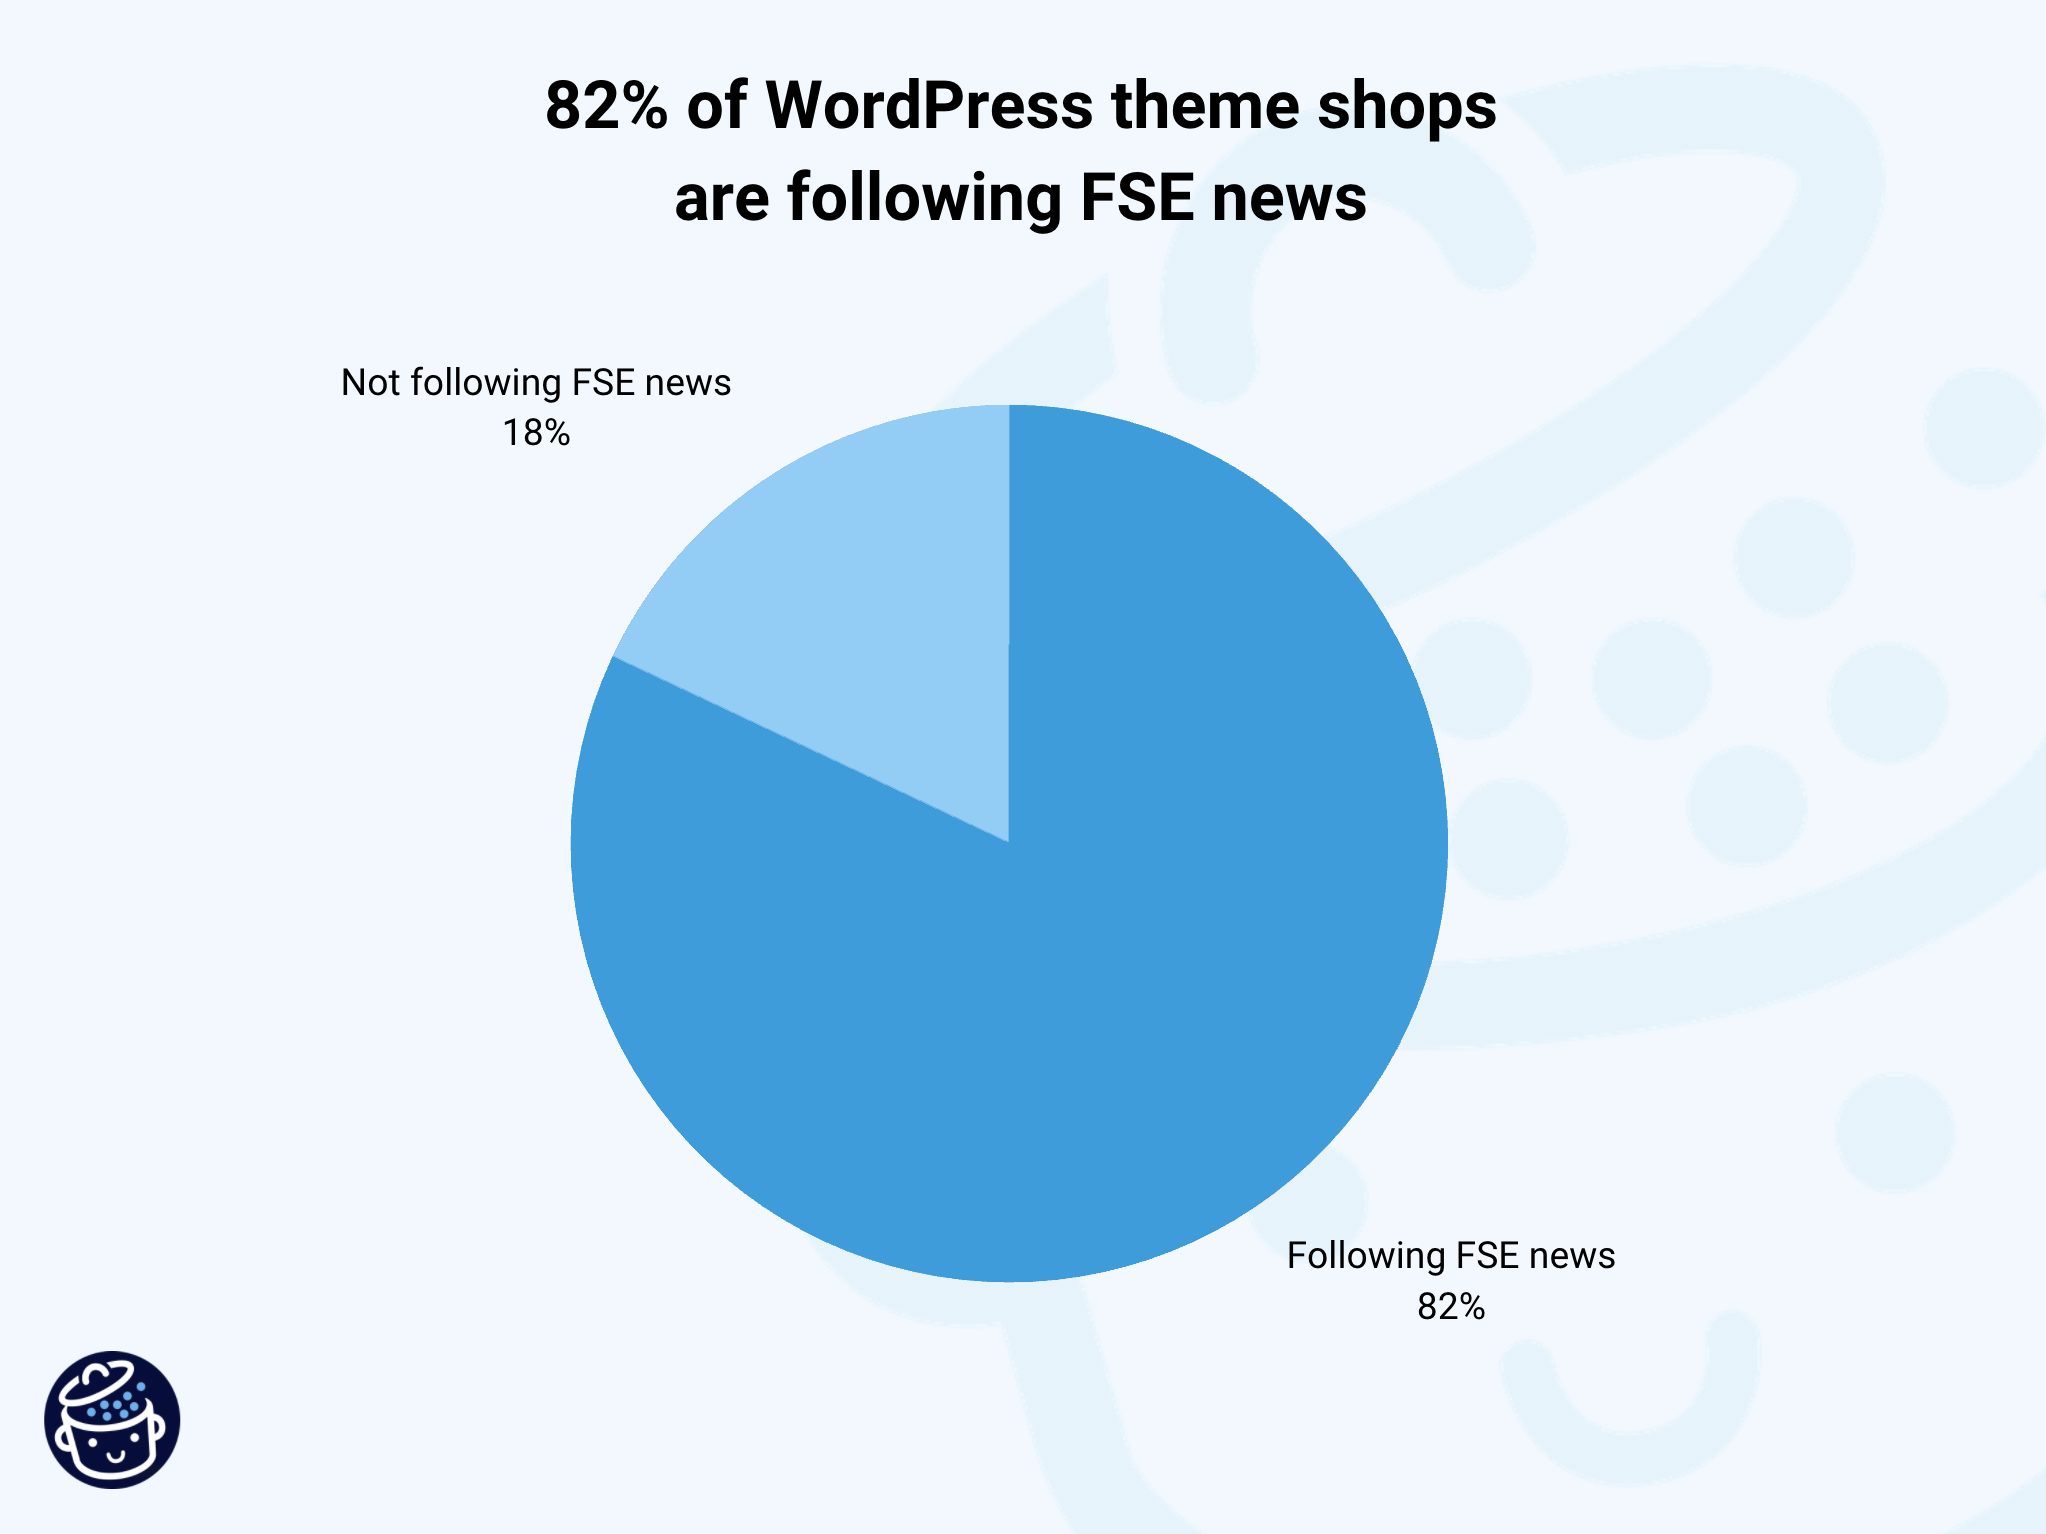 WordPress theme shops following Full Site Editing (FSE) news.